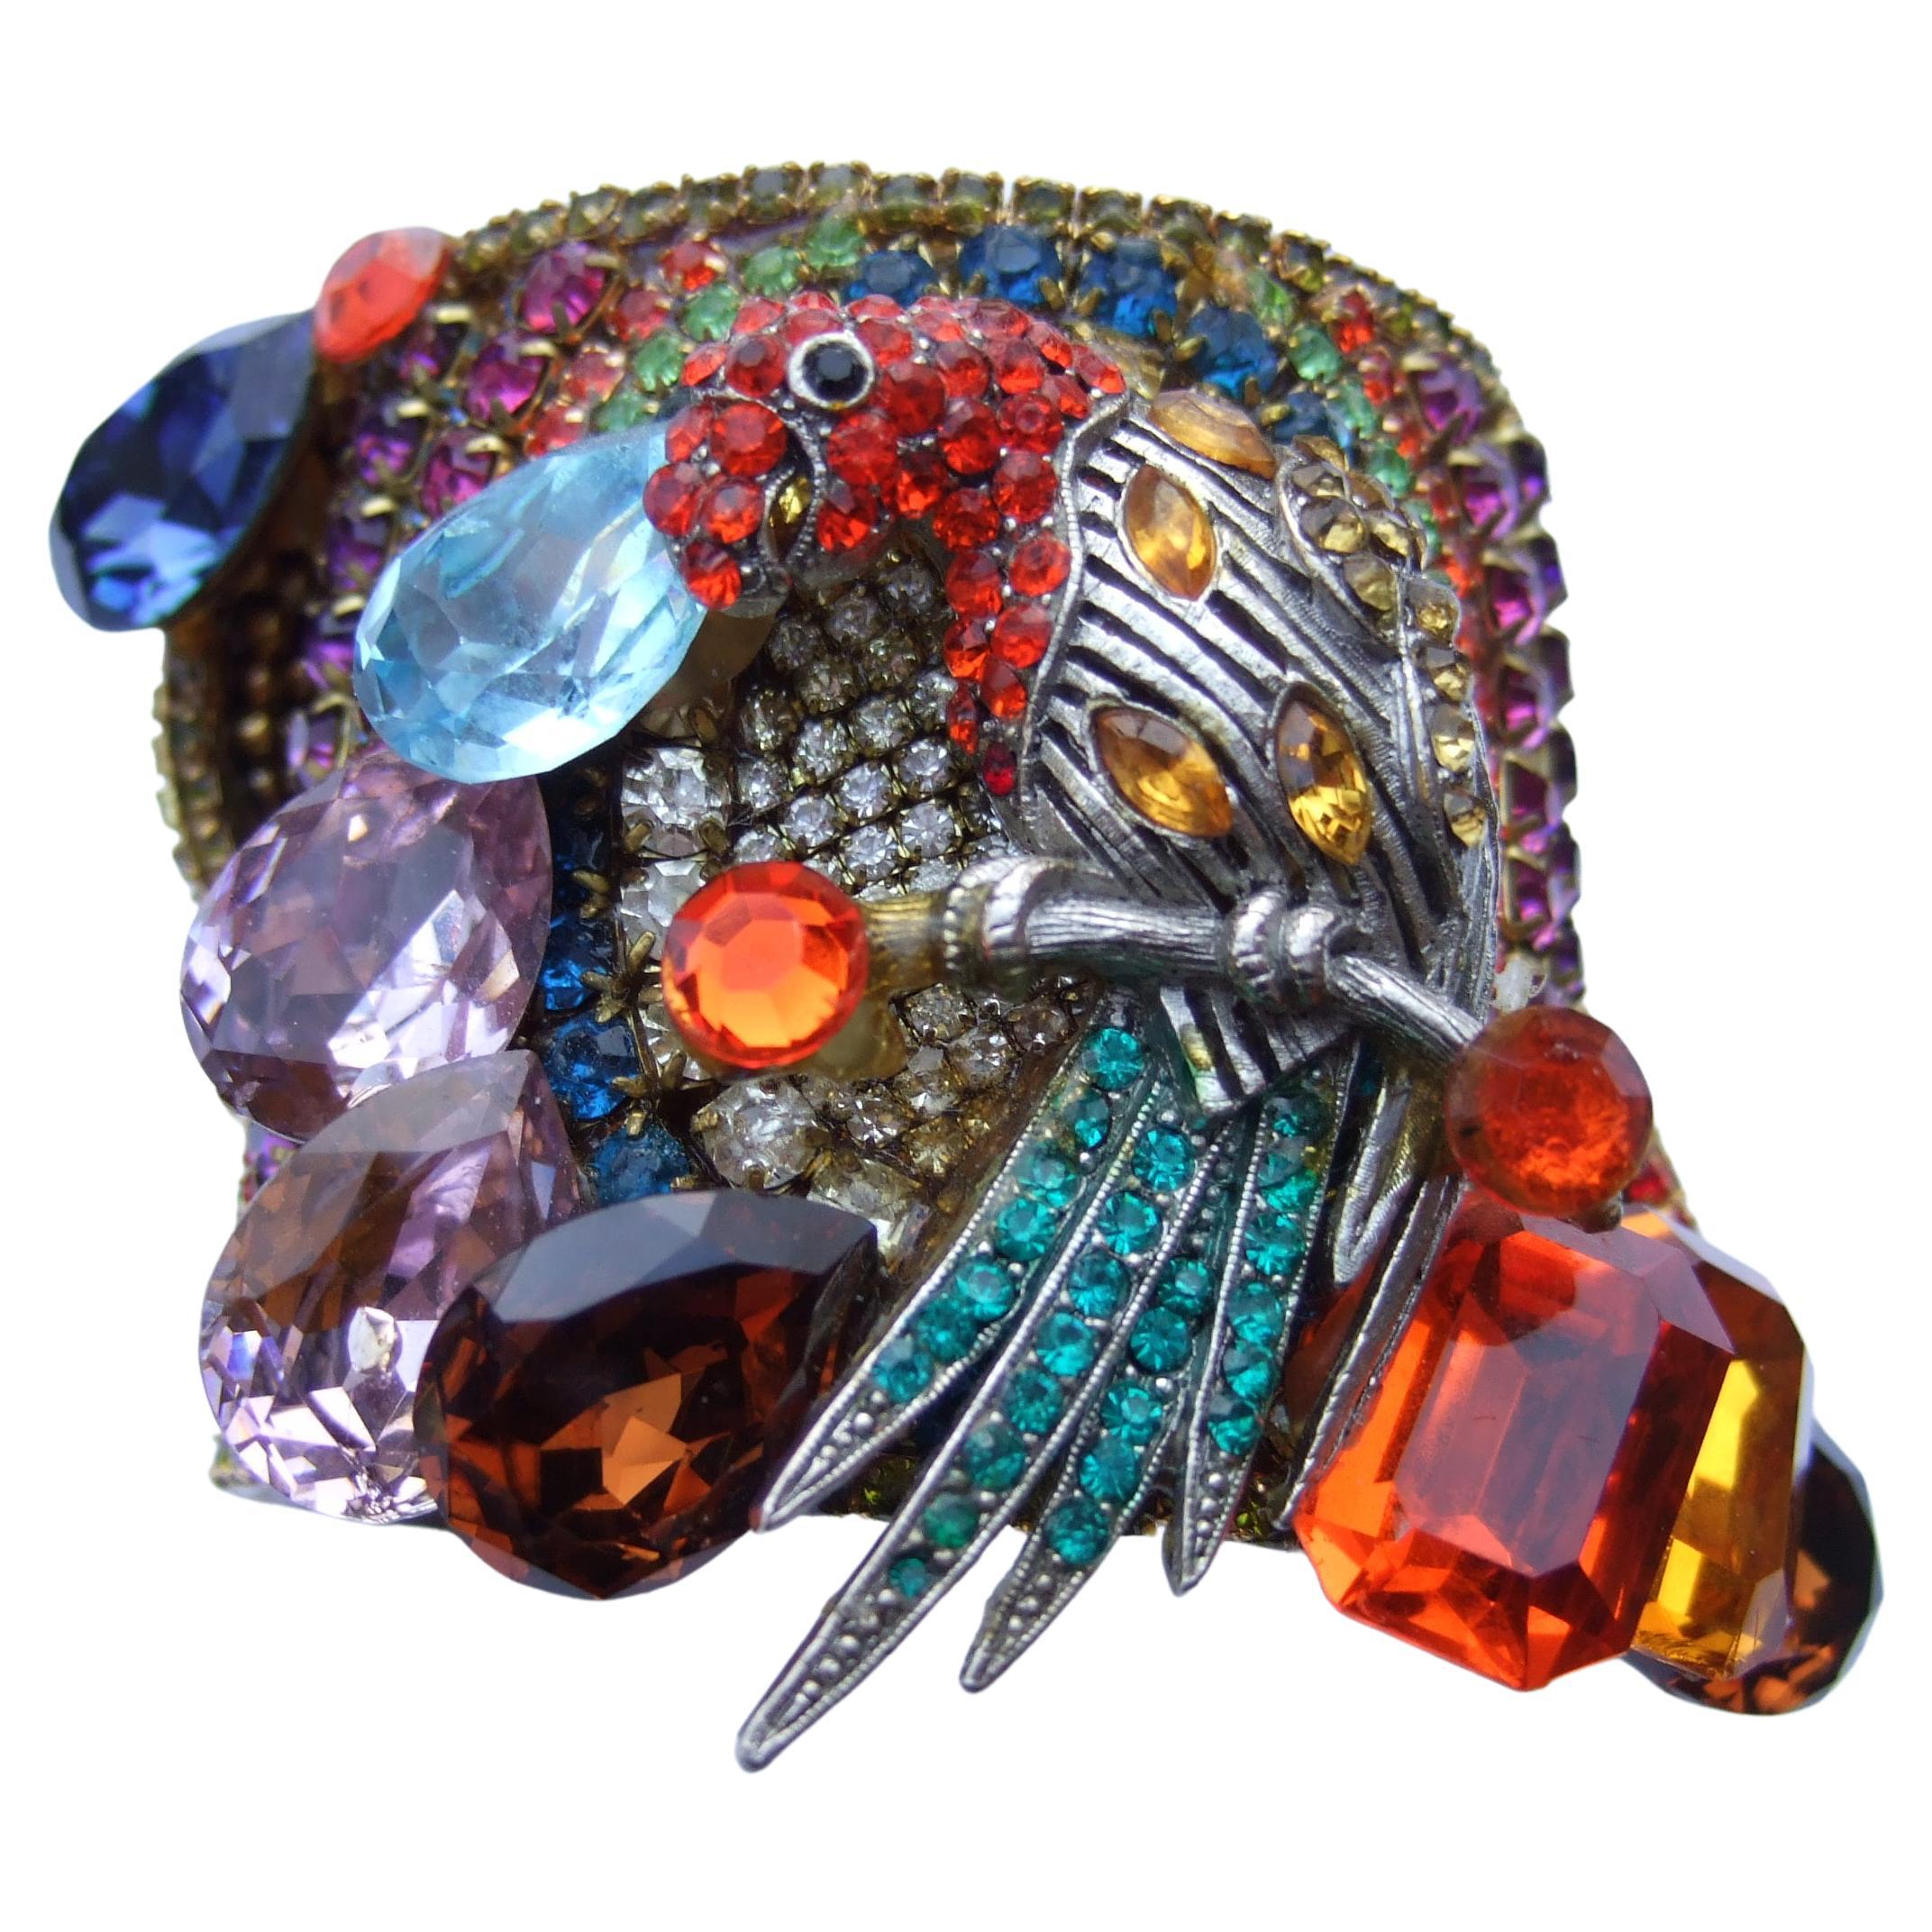 Wendy Gell Massive Crystal Encrusted Parrot Design Artisan Cuff Bracelet c 1980s